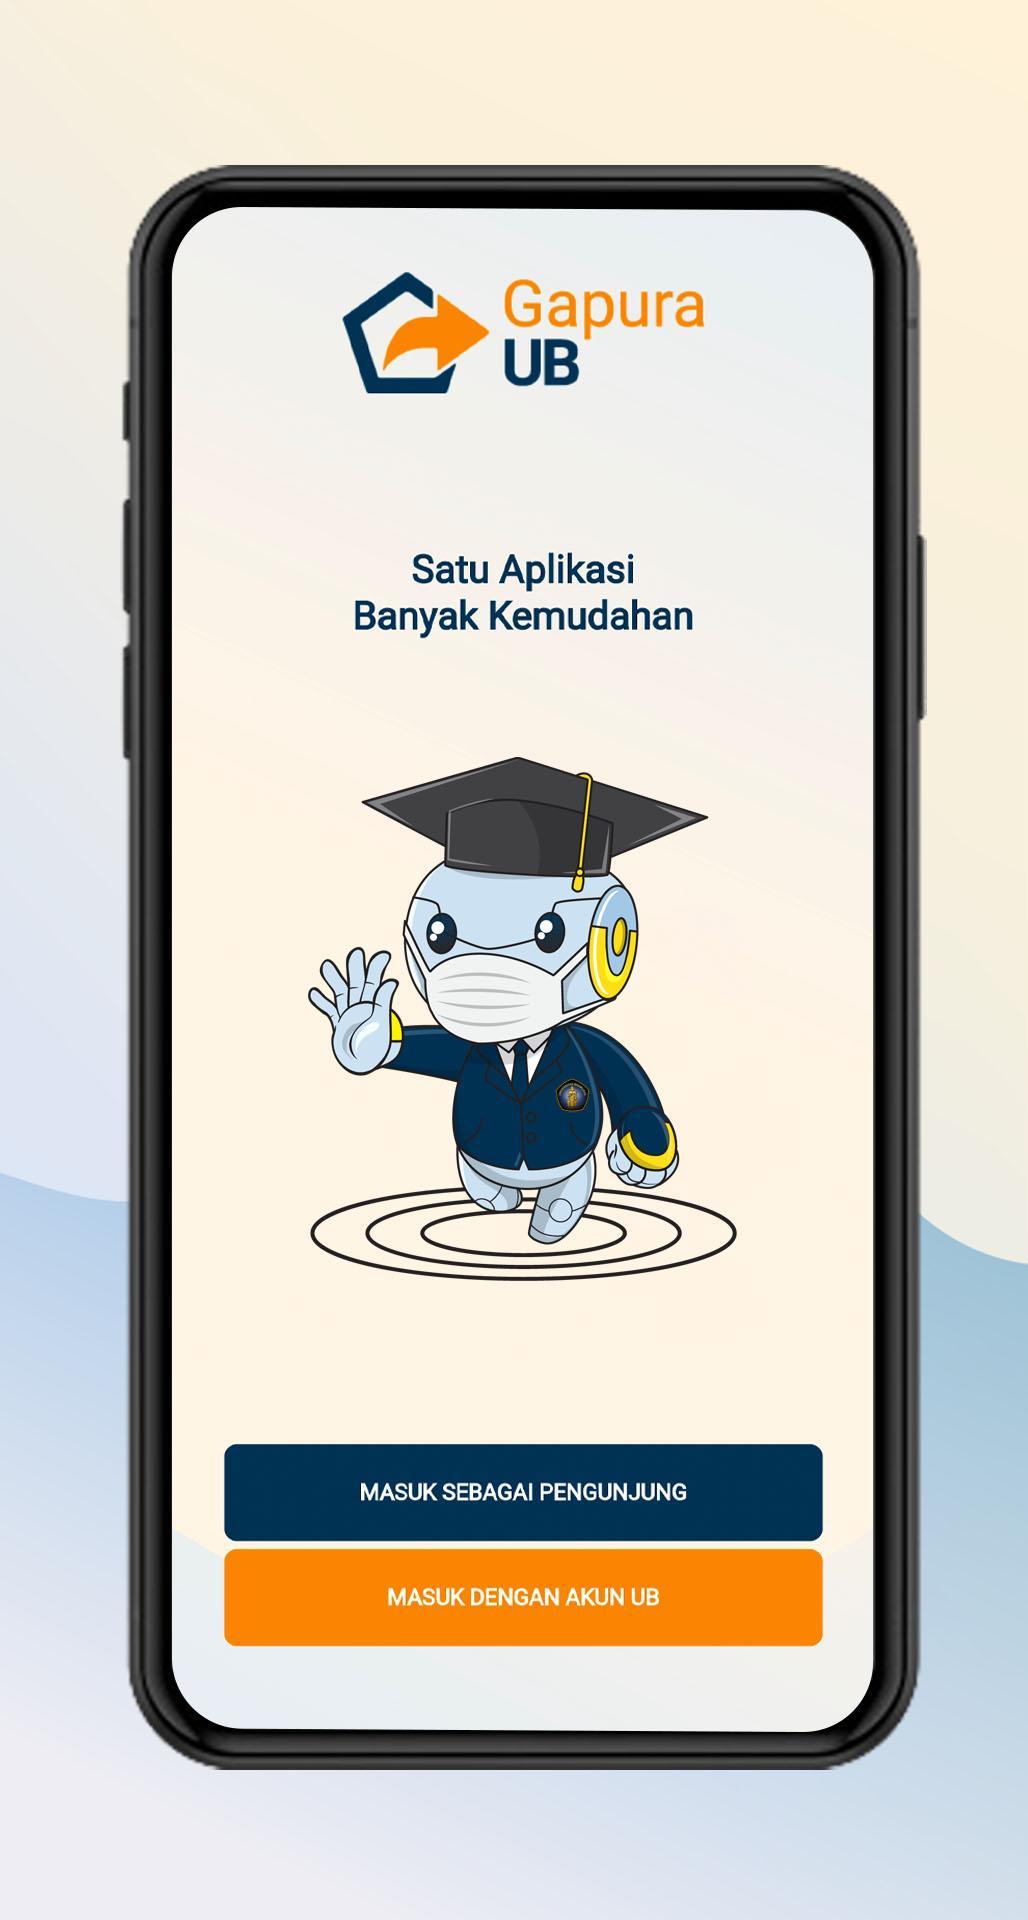 Gapura UB for Android - APK Download